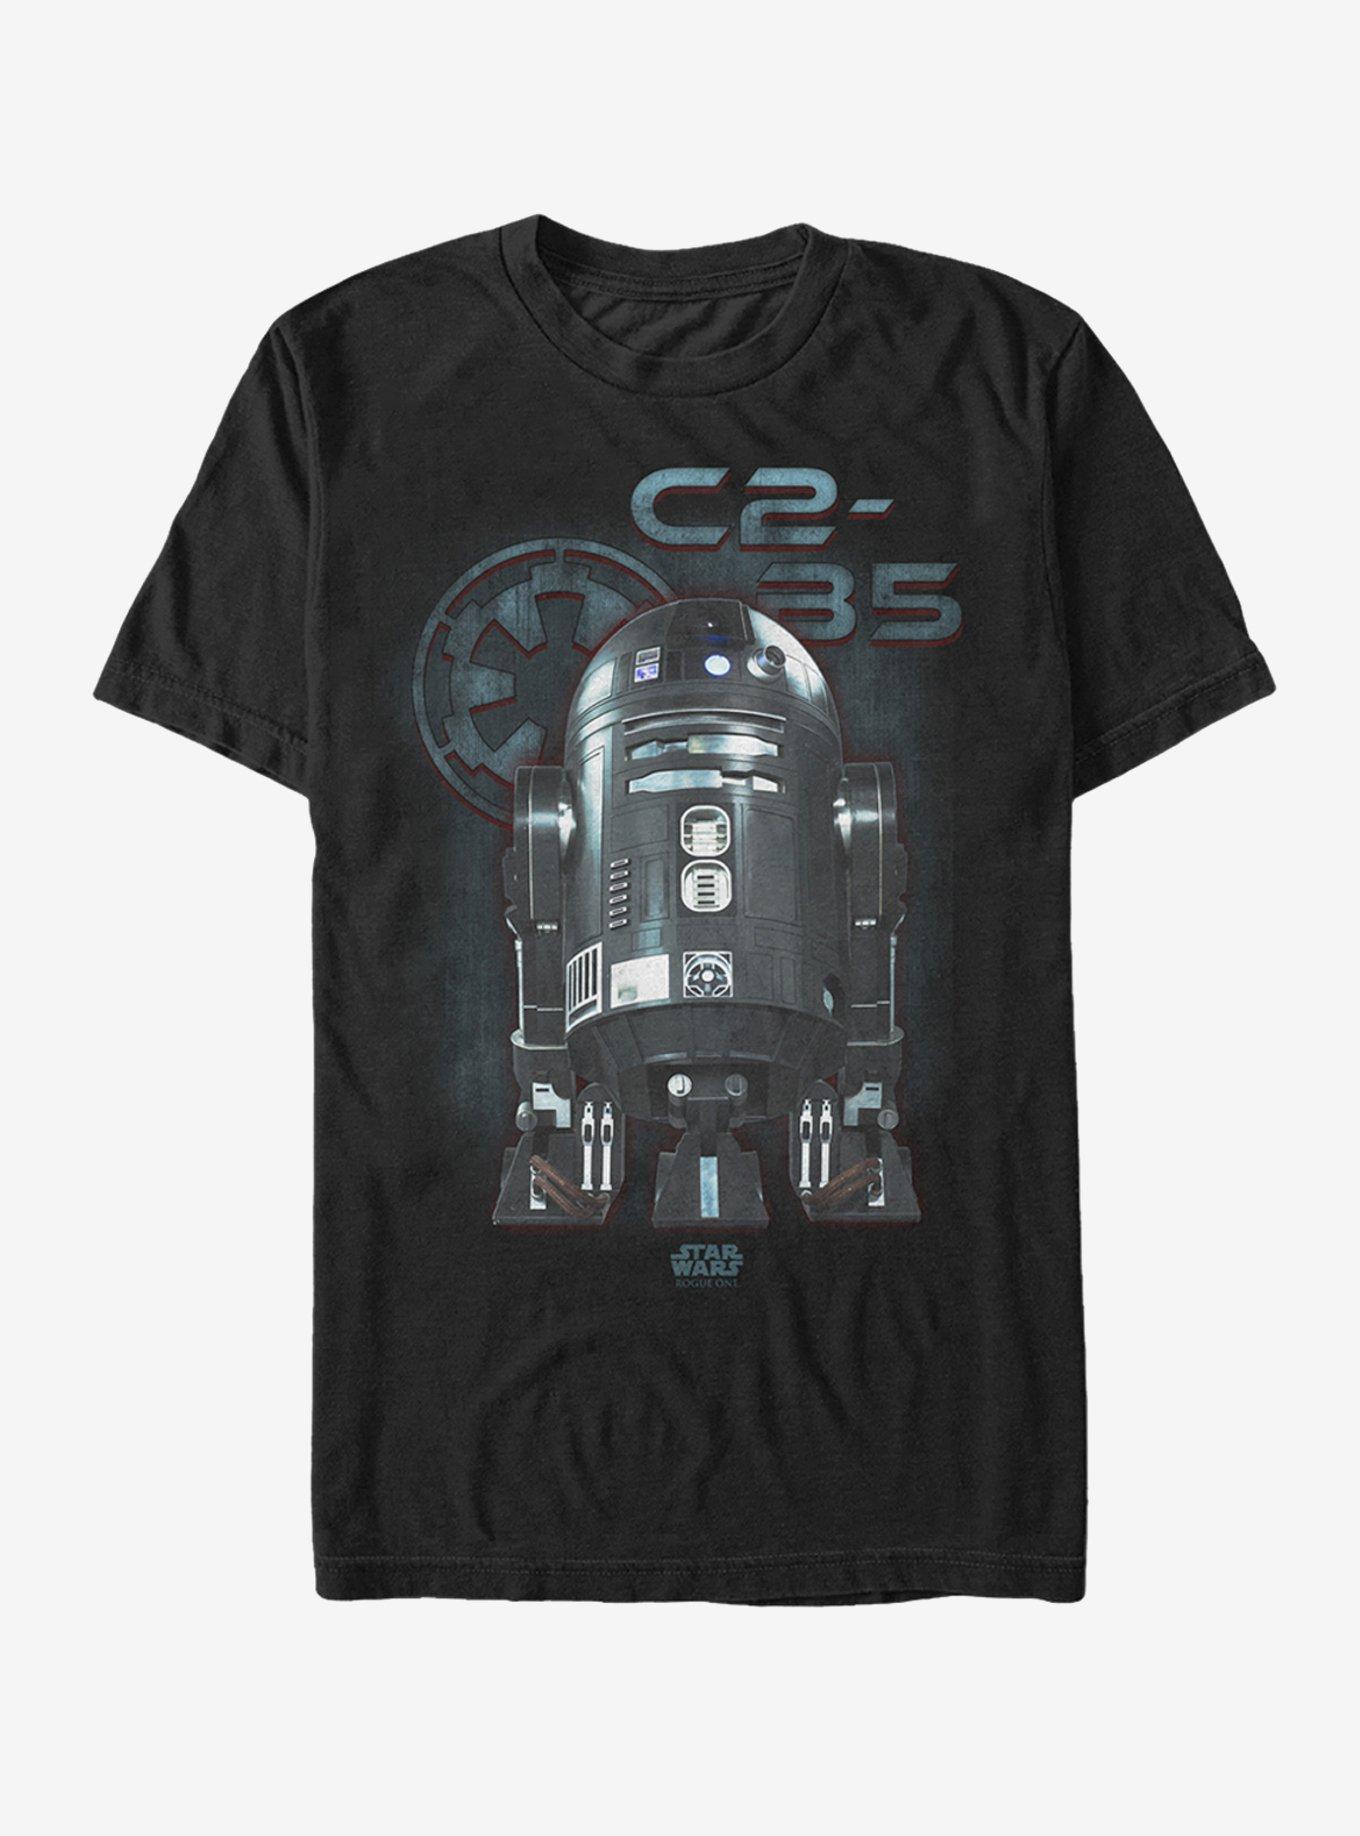 Star Wars C2-B5 Symbol T-Shirt, BLACK, hi-res